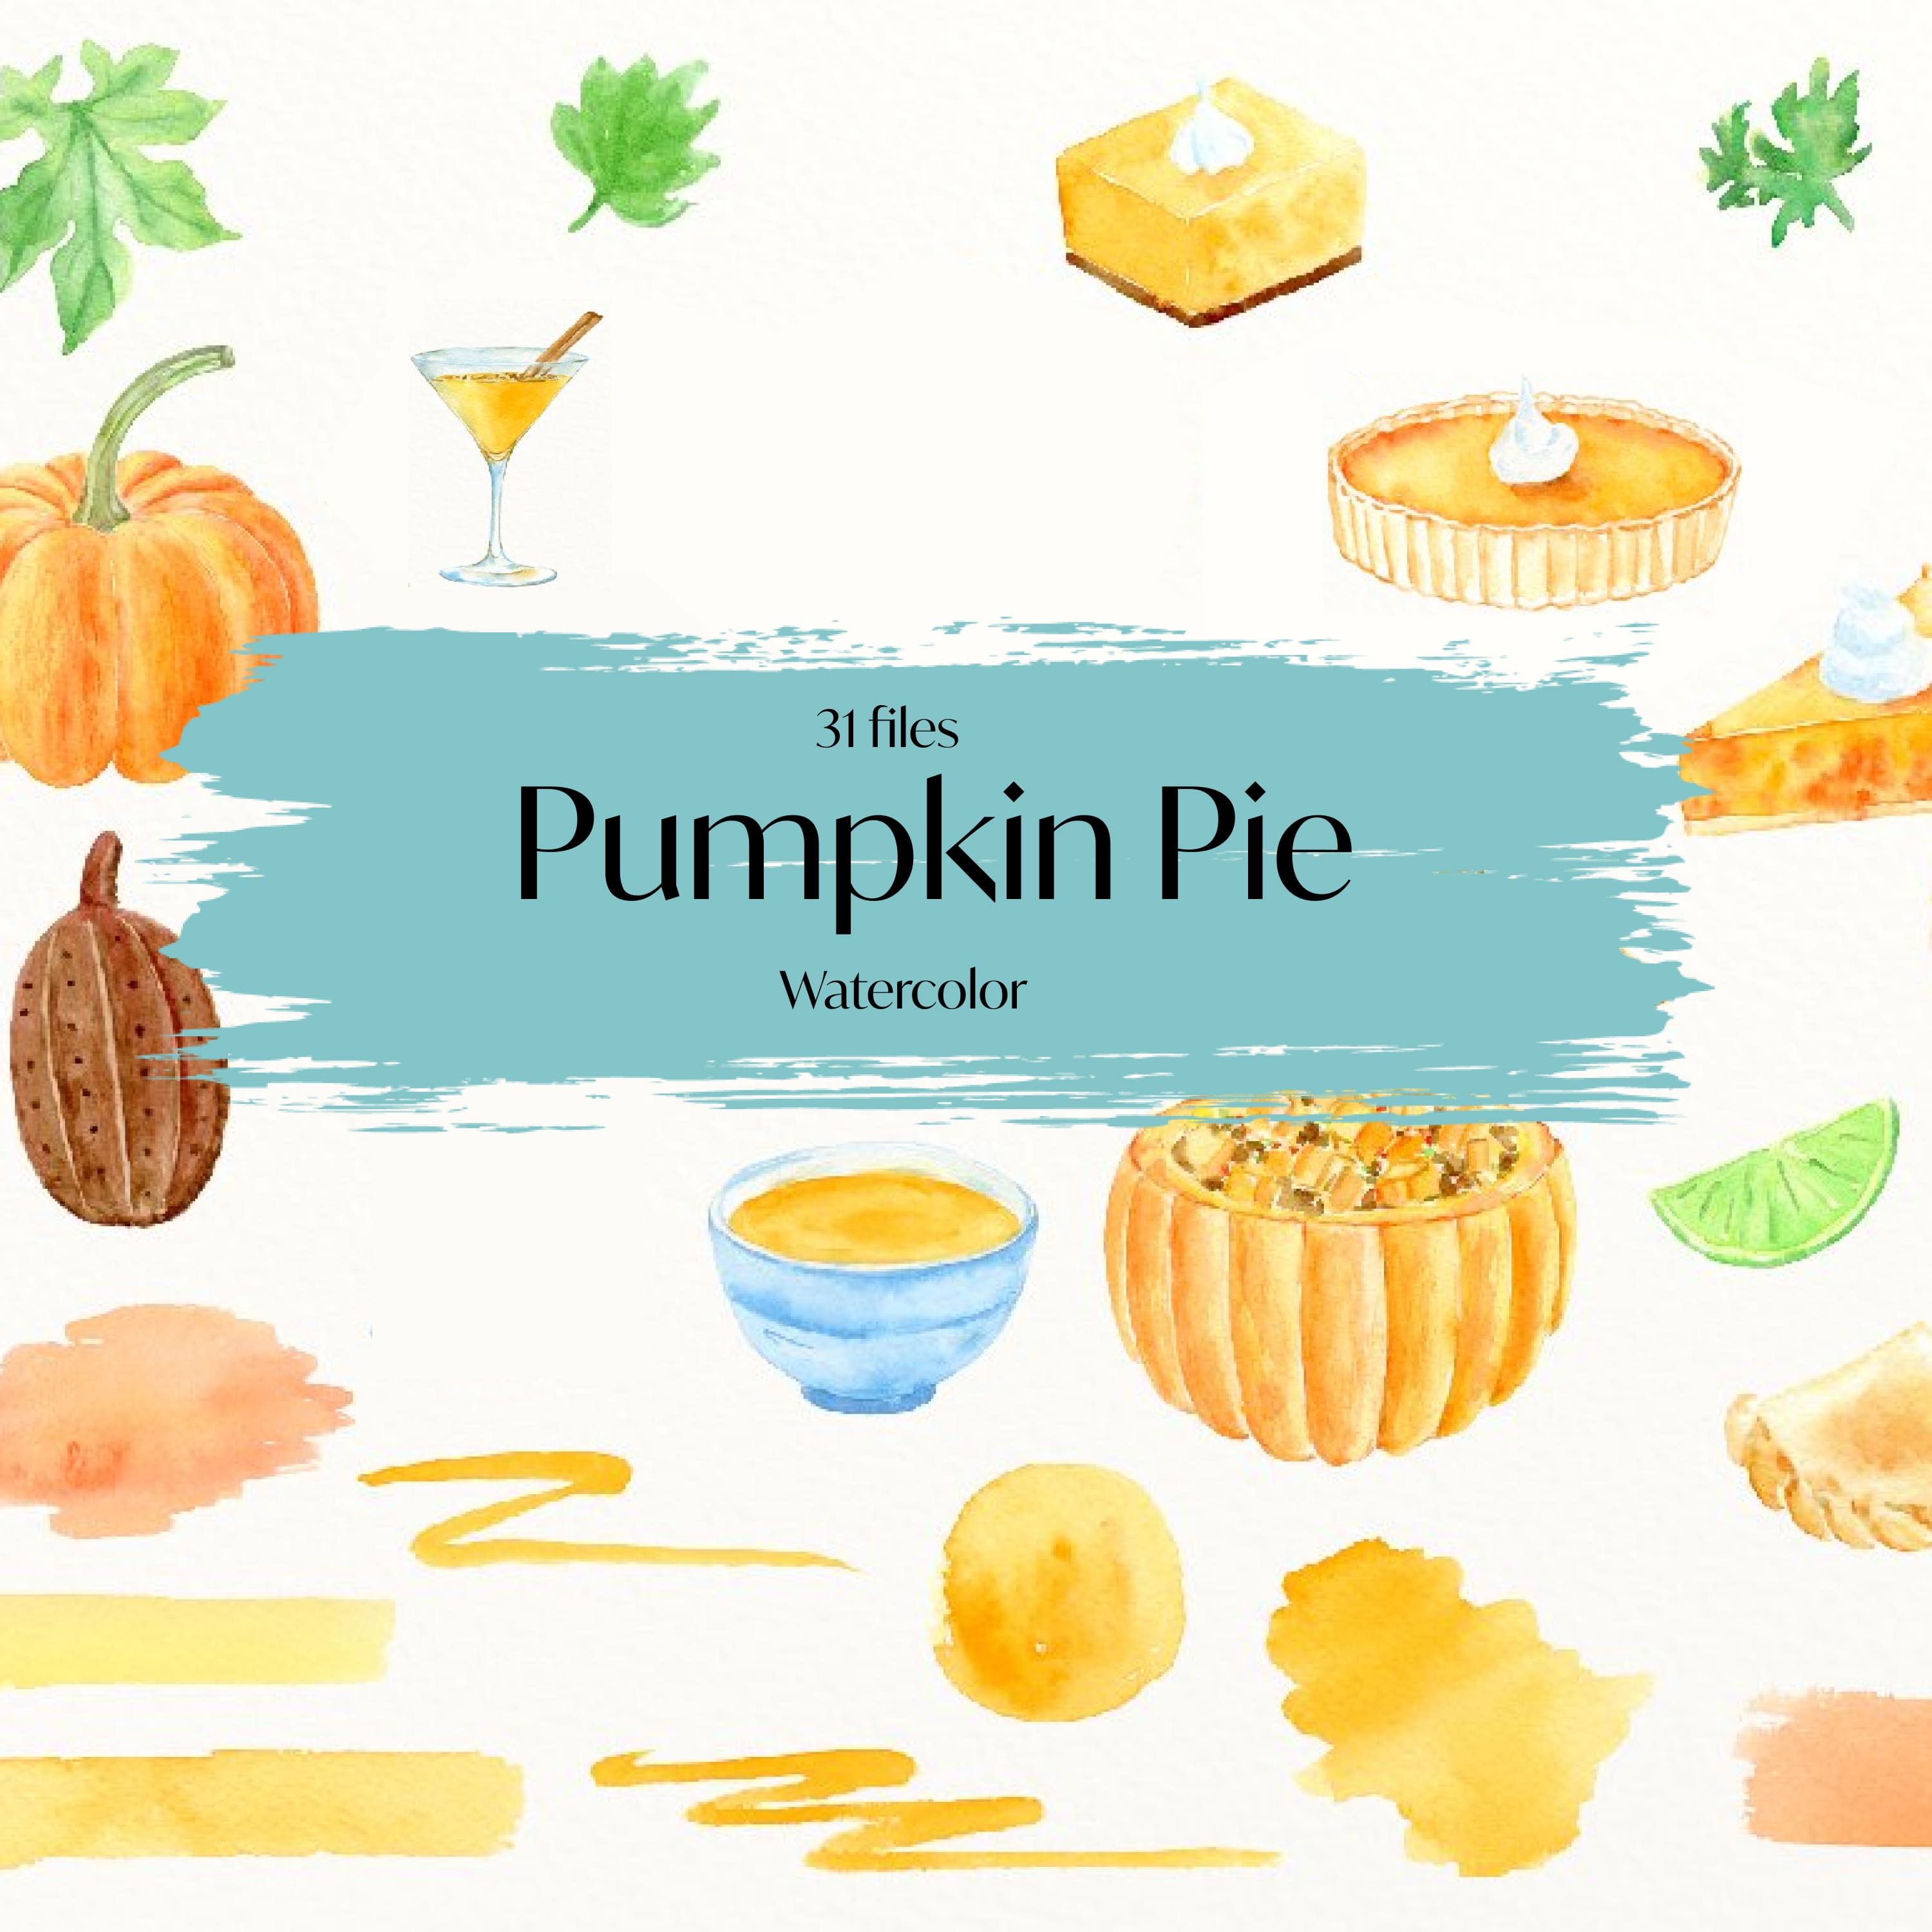 Watercolor Pumpkin Pie cover.